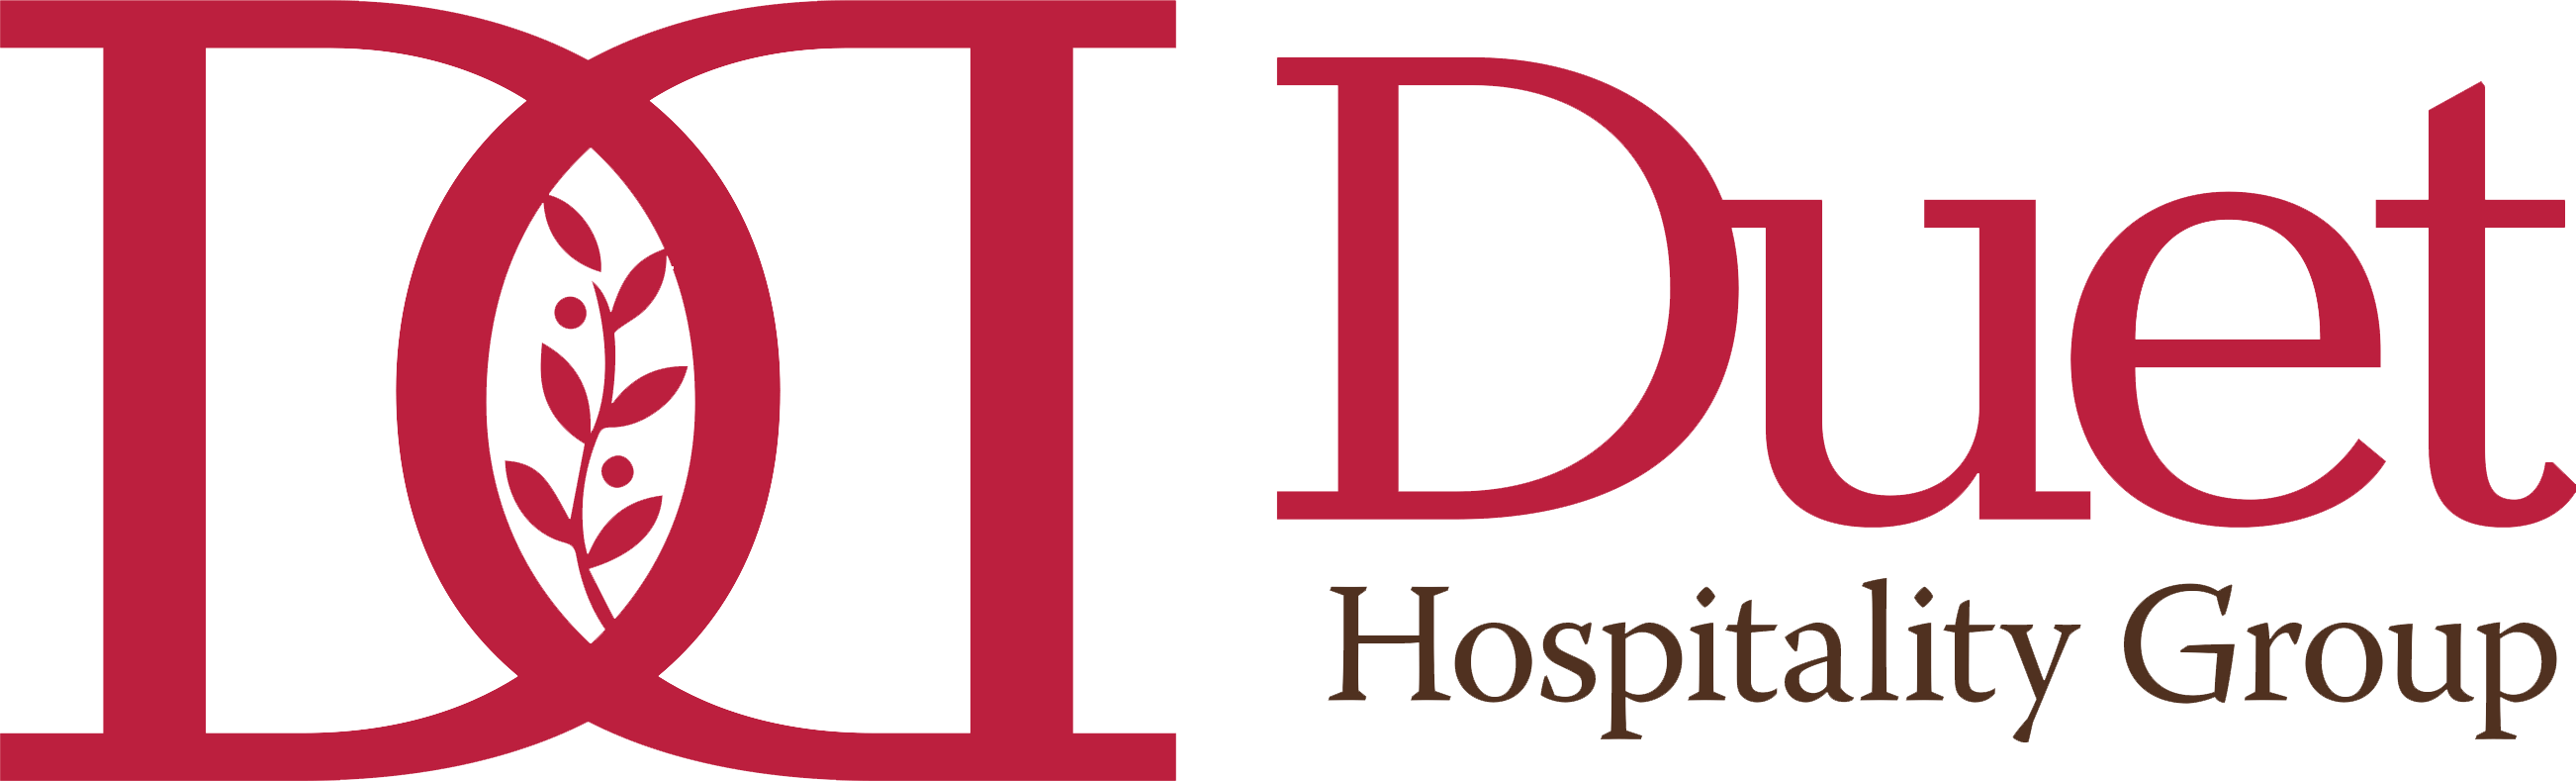 duet hospitality group logo